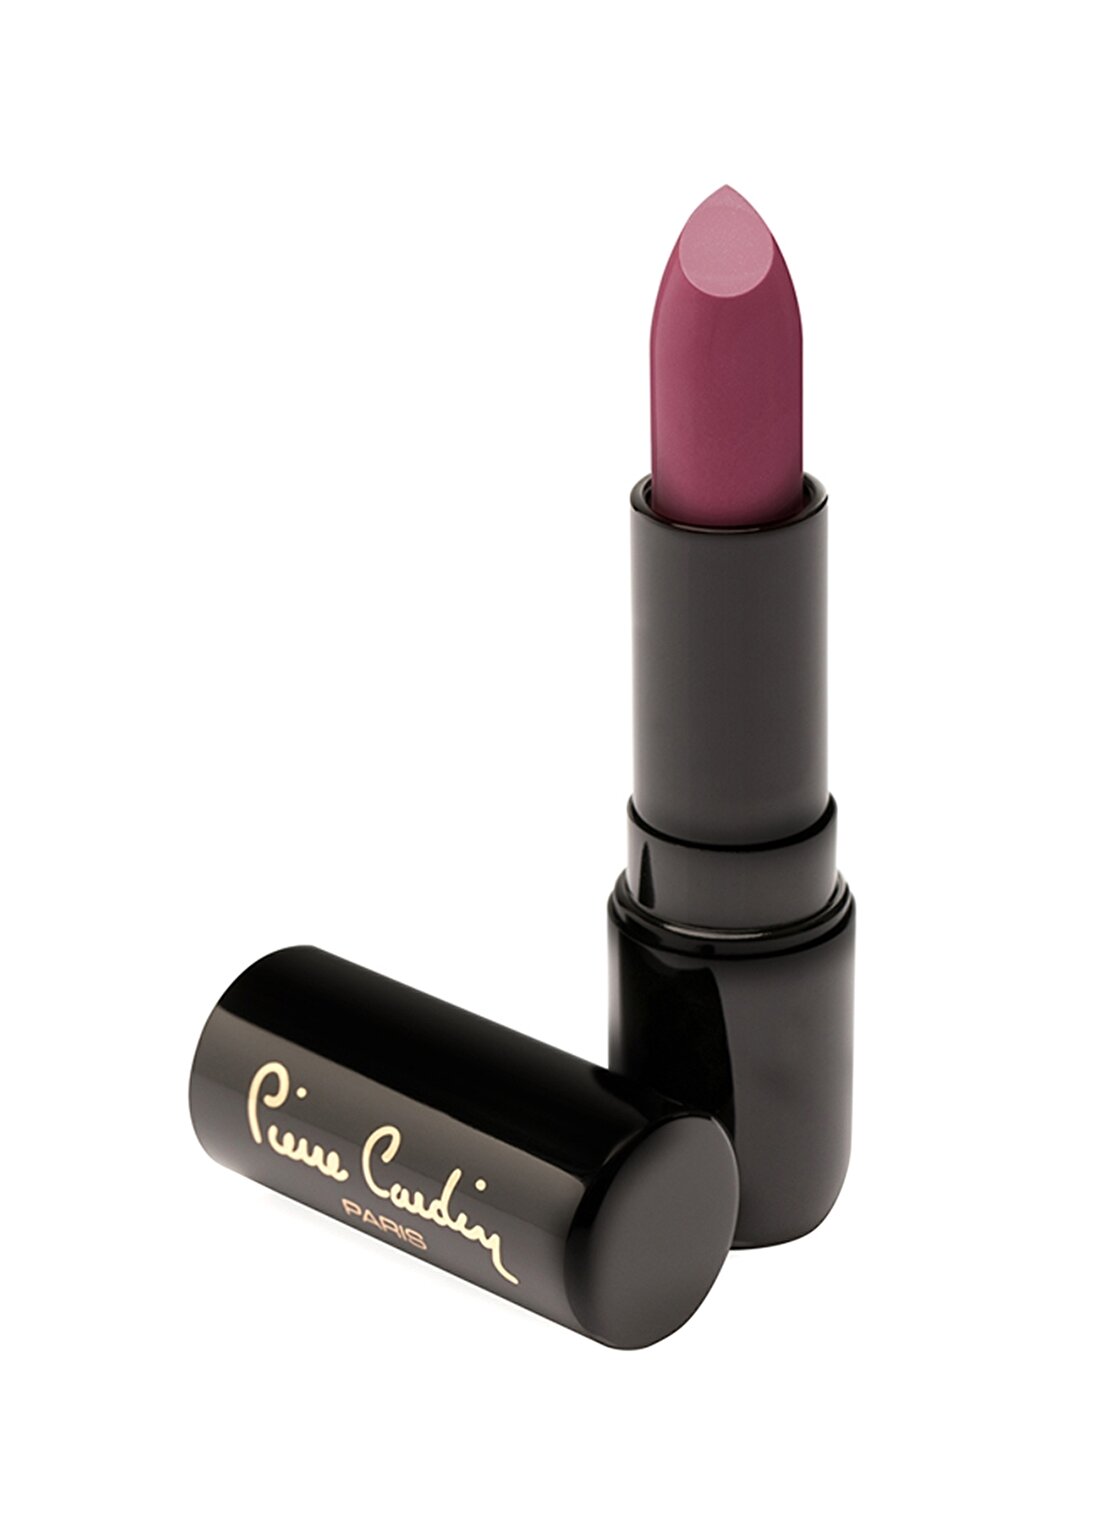 Pierre Cardin Porcelain Edition Lipstick - Berry Rouge 231 Ruj